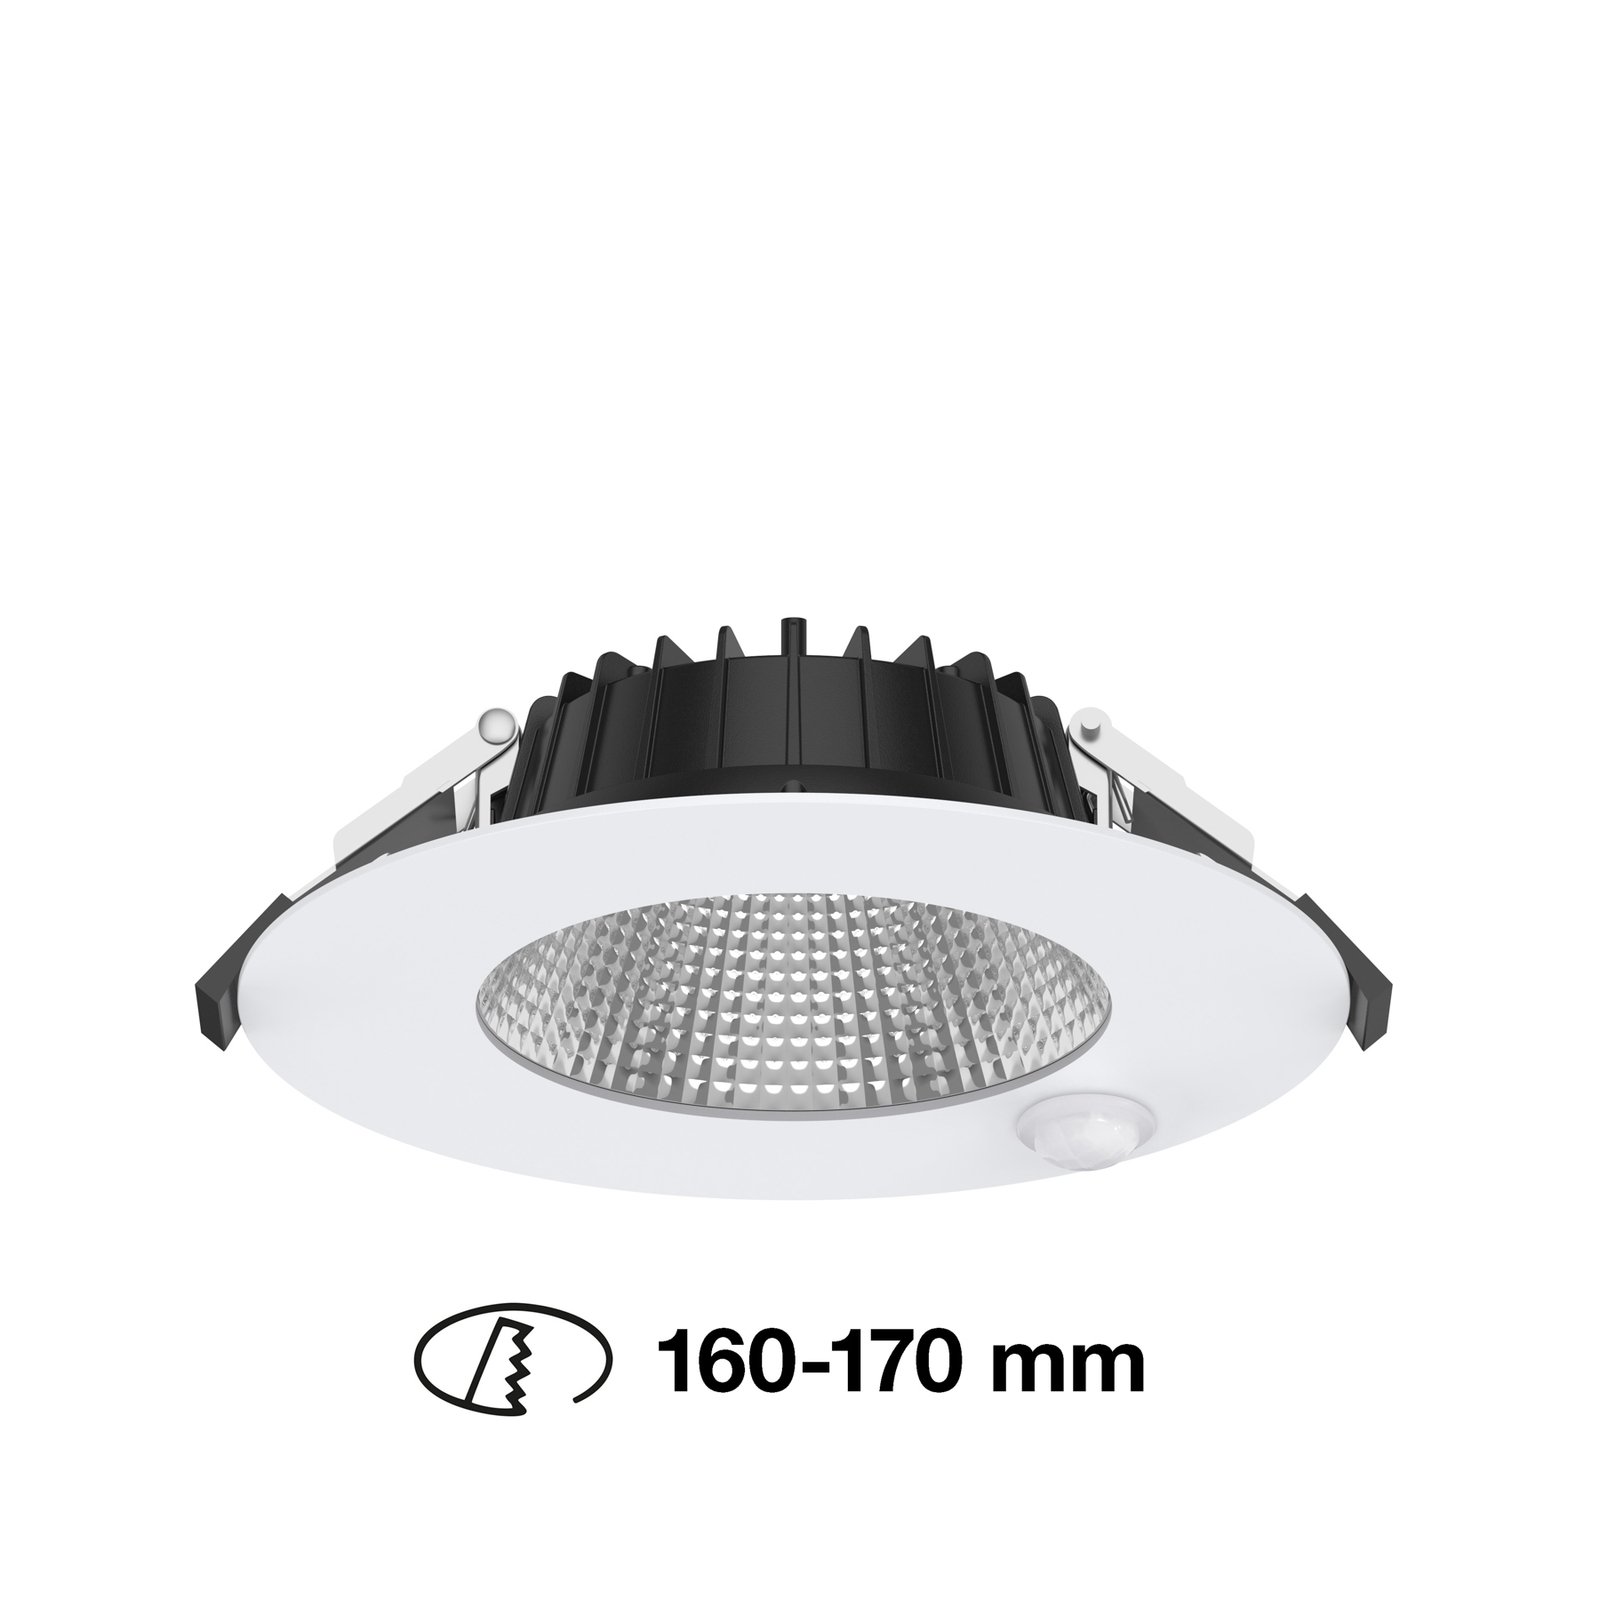 SLC Shift LED downlight Ø18cm white with sensor